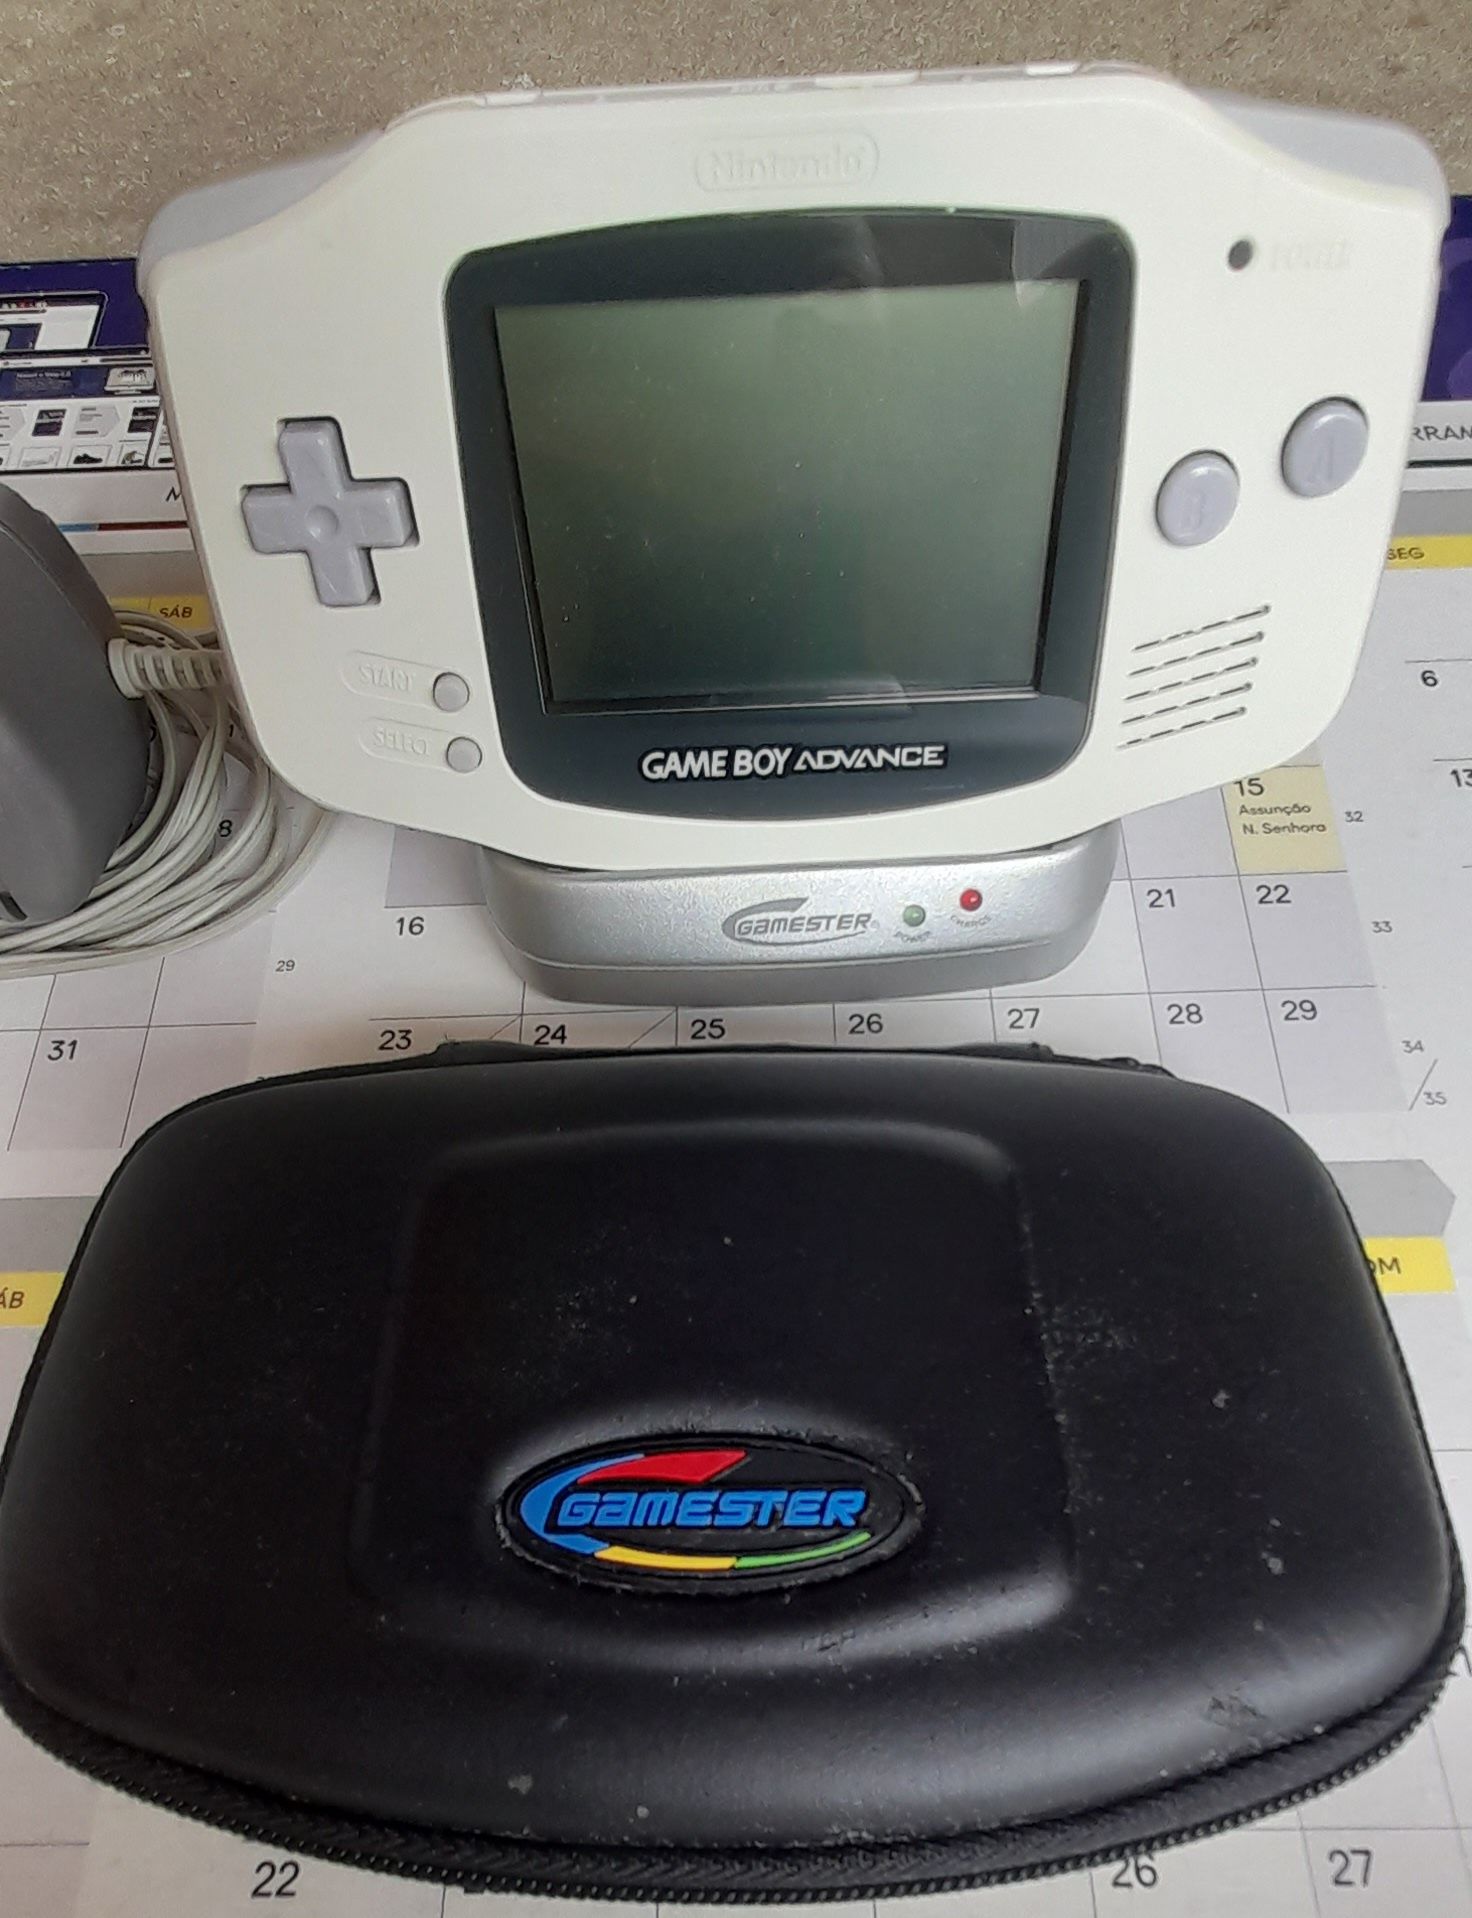 Gameboy Advanced com carregador, base para carregar e bolsa Gamester